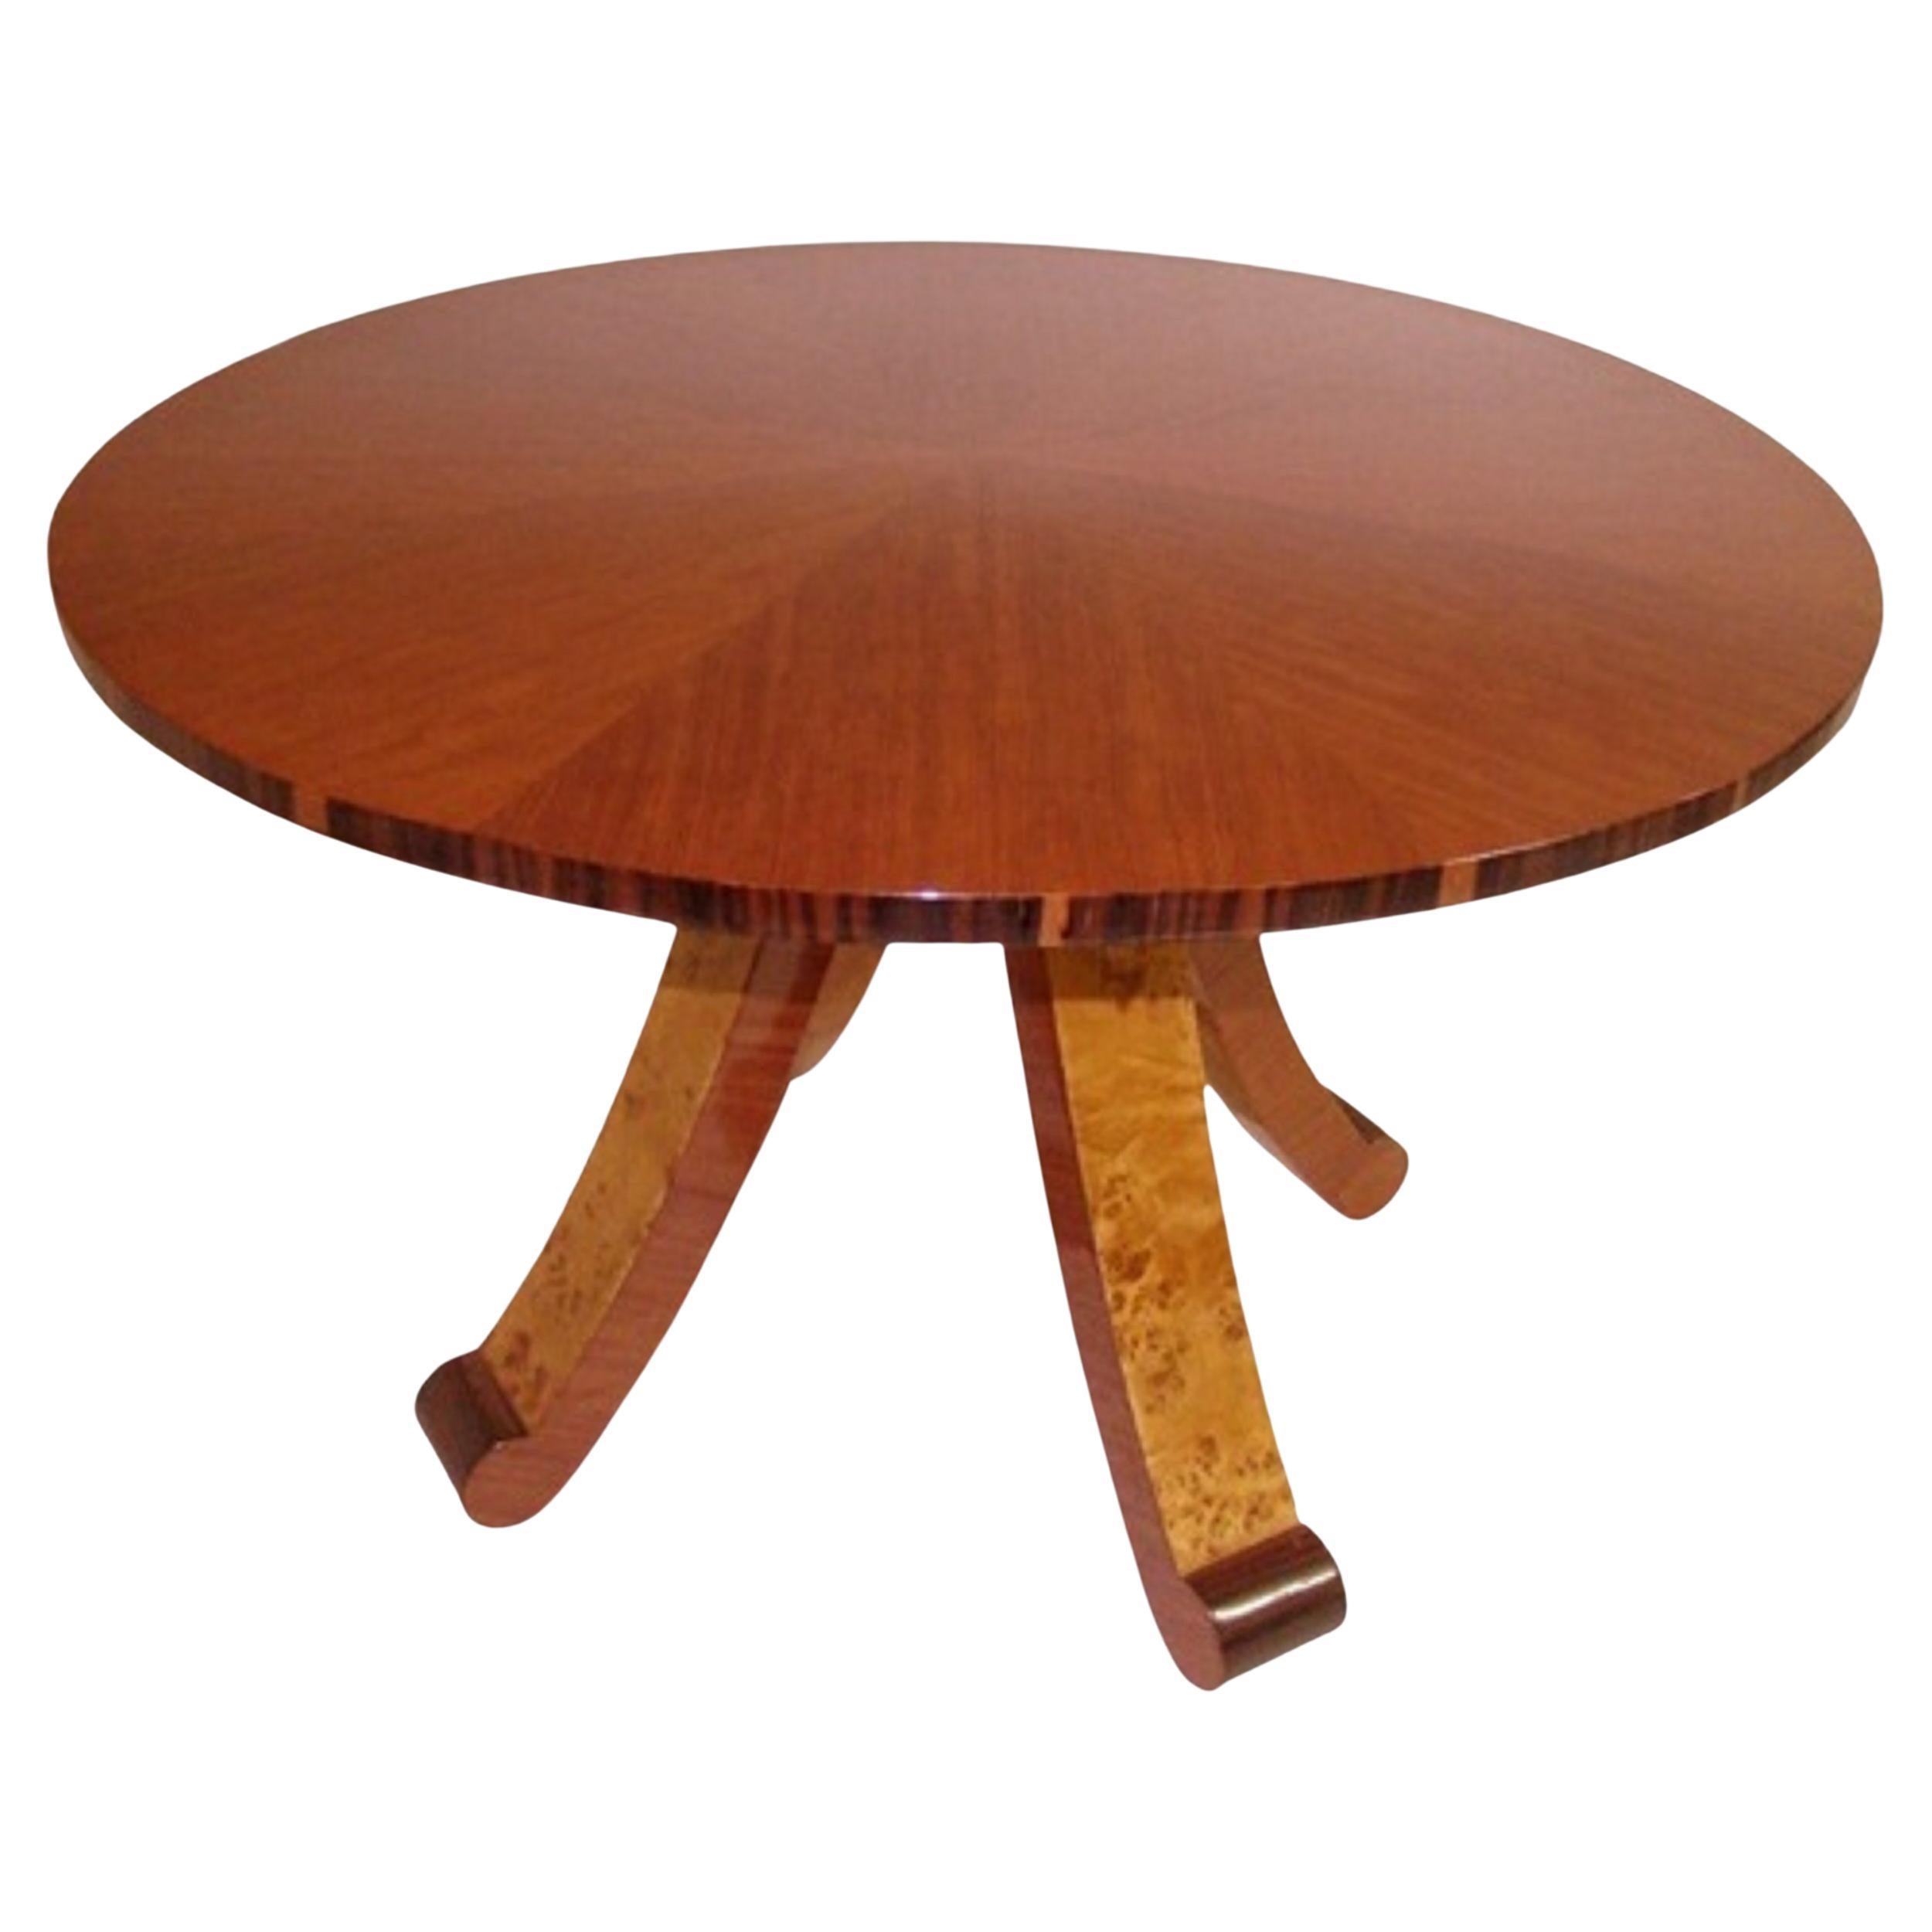 Tisch, Art déco, Frankreich, 1930, Material: Holz